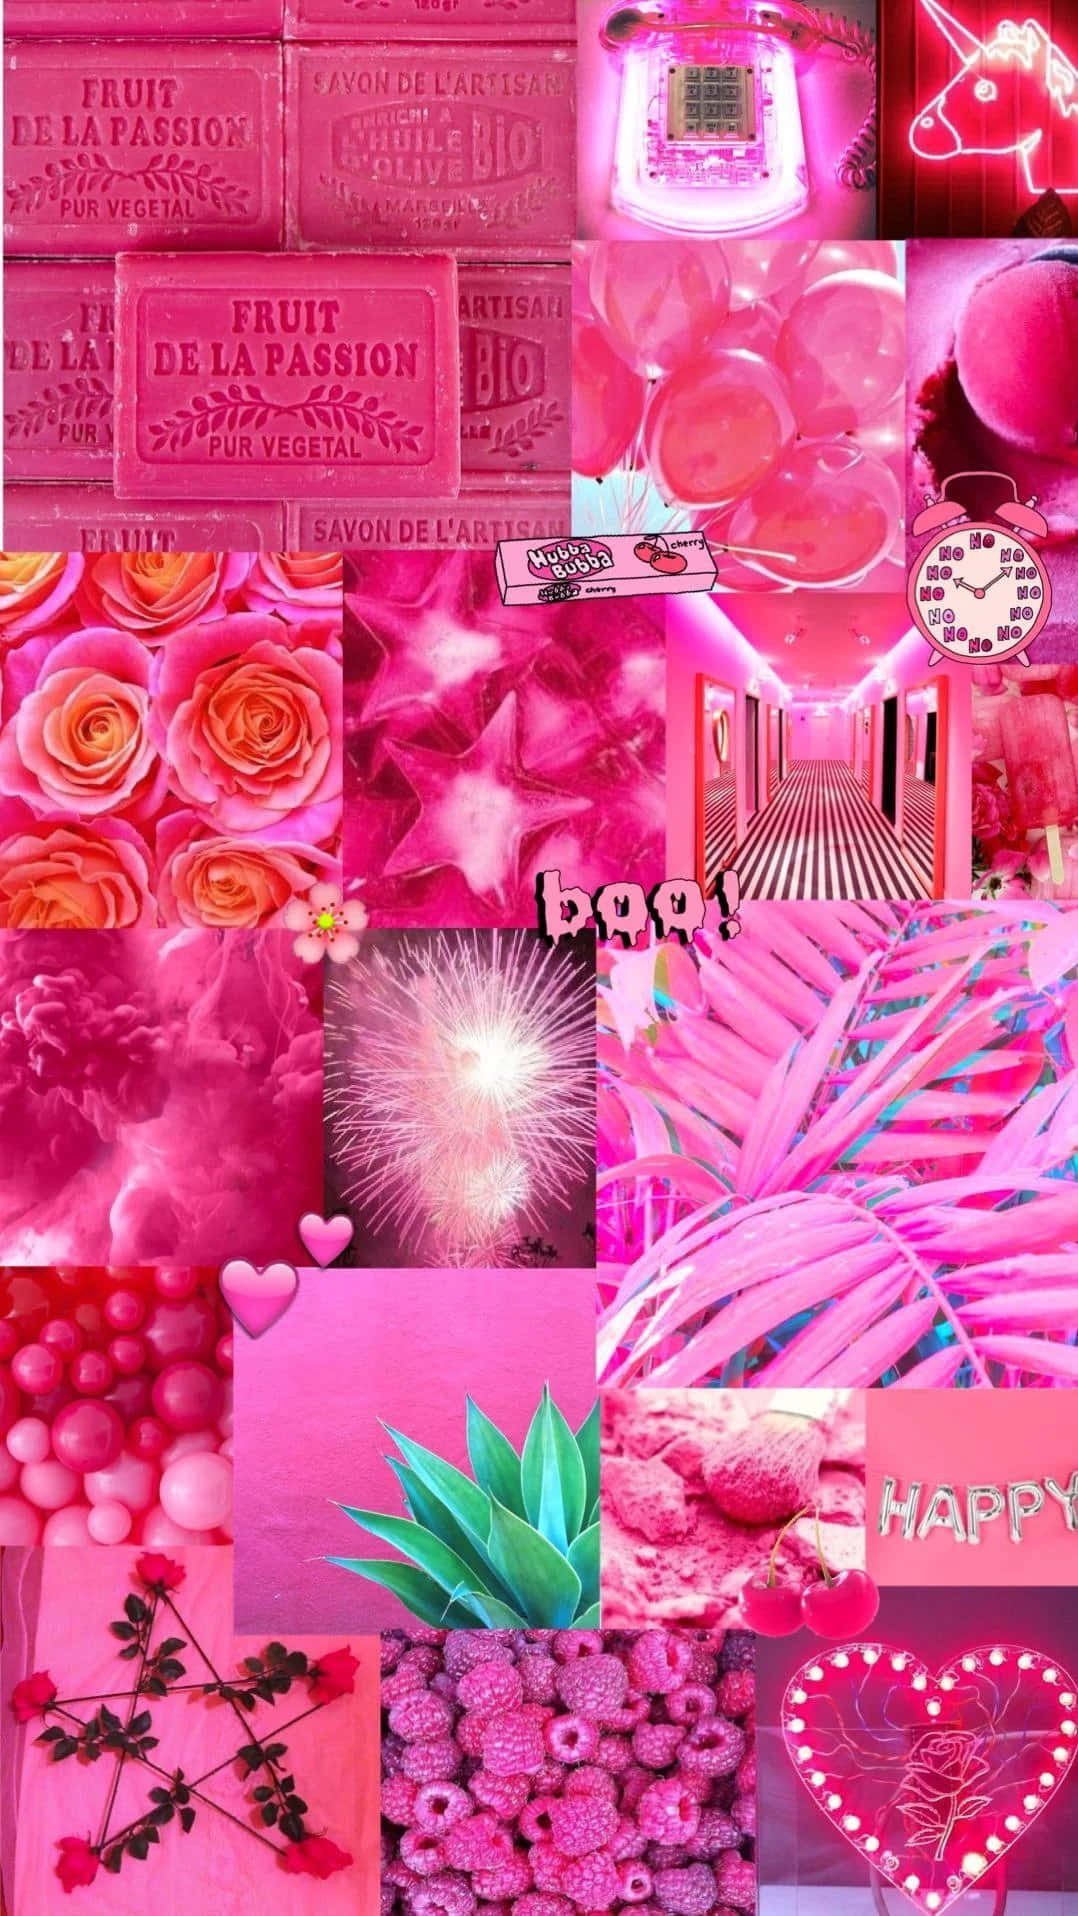 Fornydin Dag Med Denne Livlige Neon Pink Aesthetic!